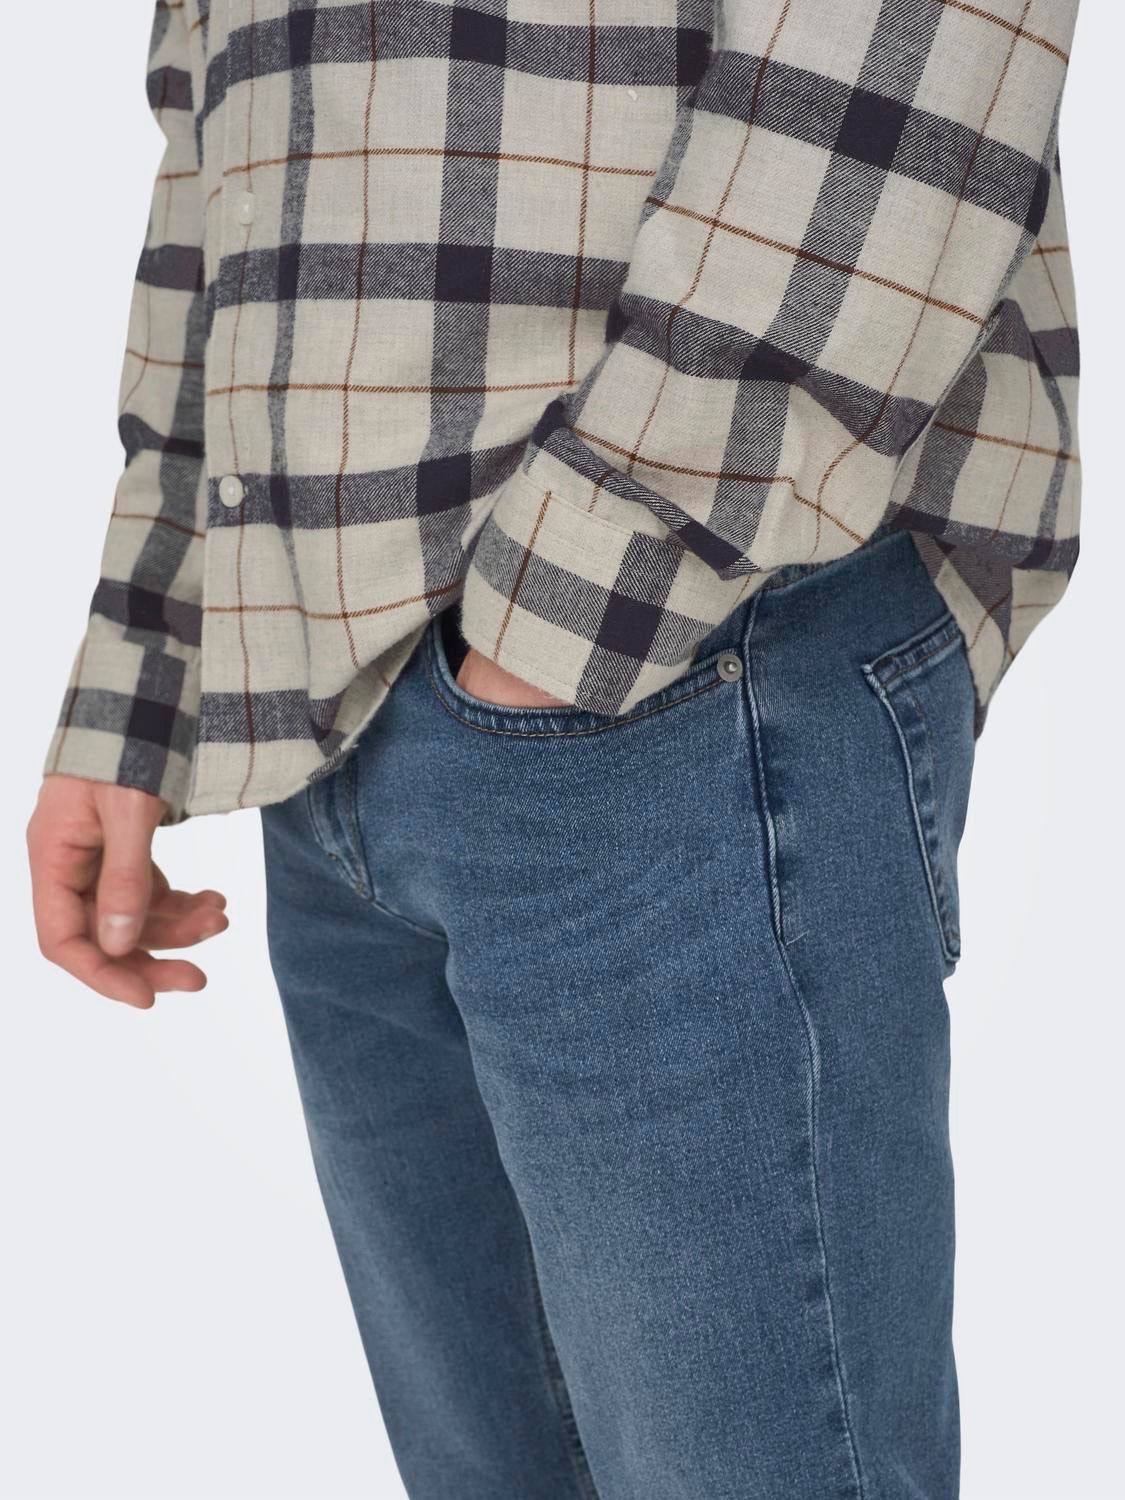 ONLY & SONS Slim Fit Jeans -Medium Blue Denim - 22027993